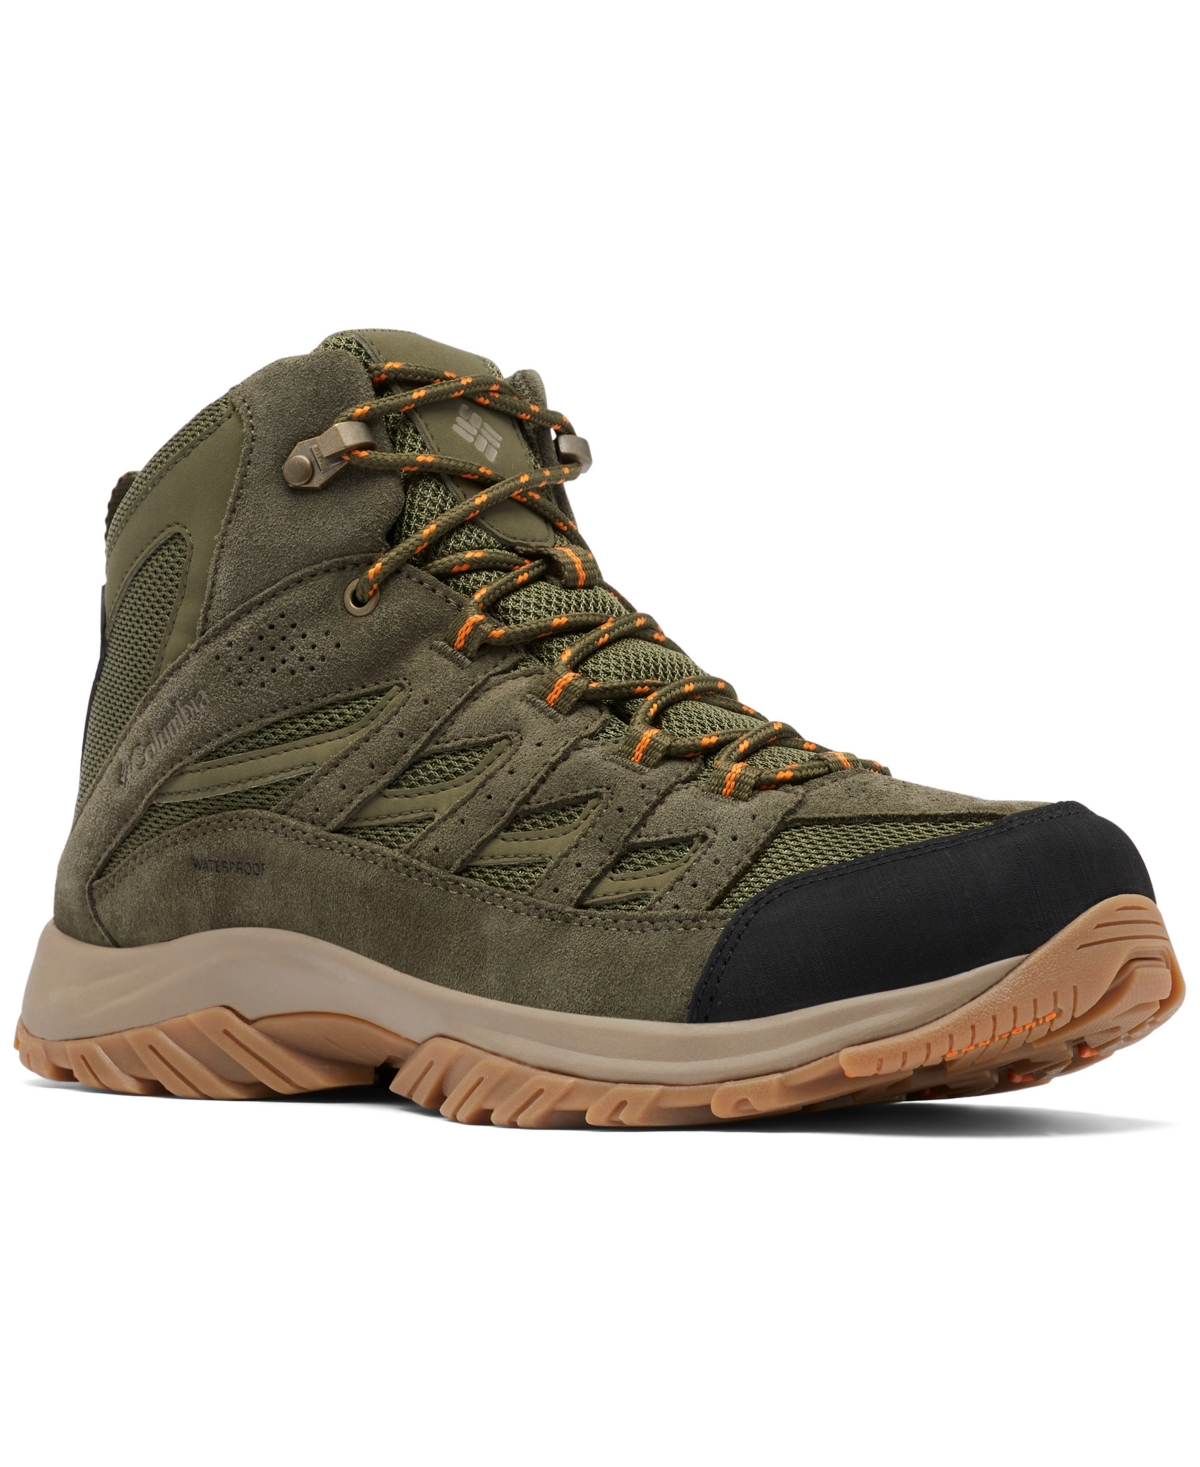 Columbia Men's Crestwood Waterproof Mid-height Hiking Boots Men's Shoes